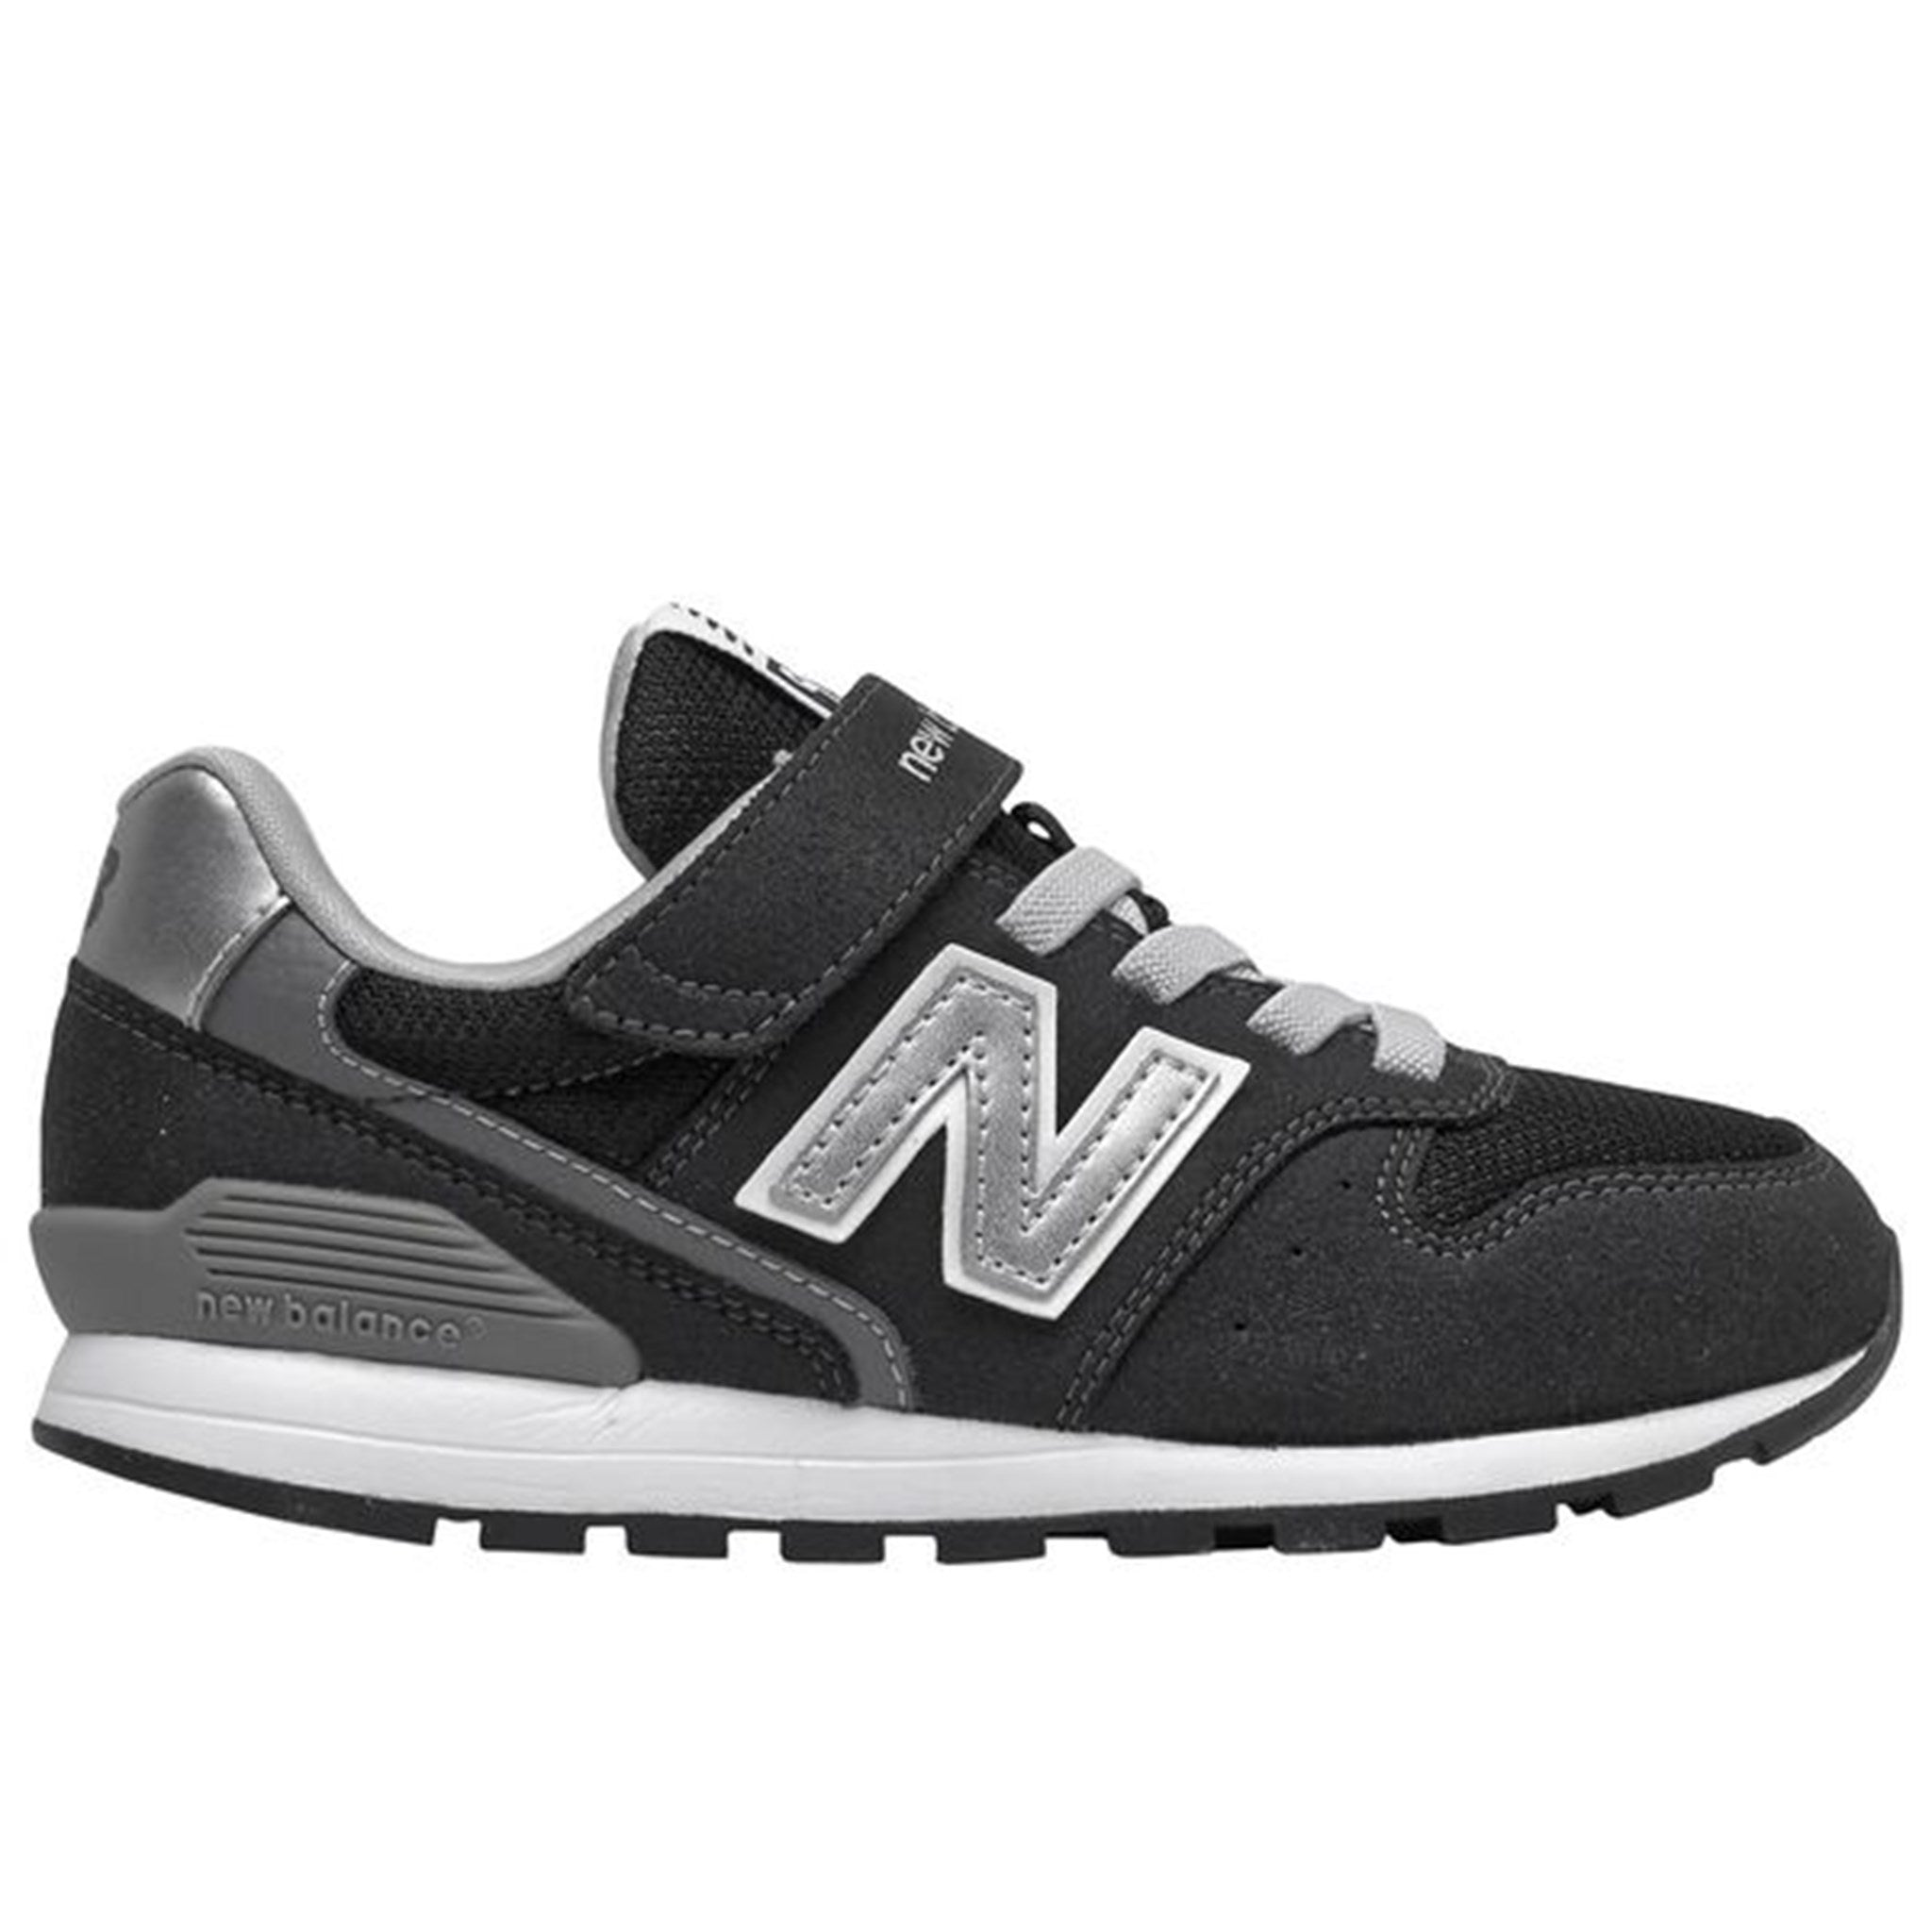 New Balance 996 Black Sneakers